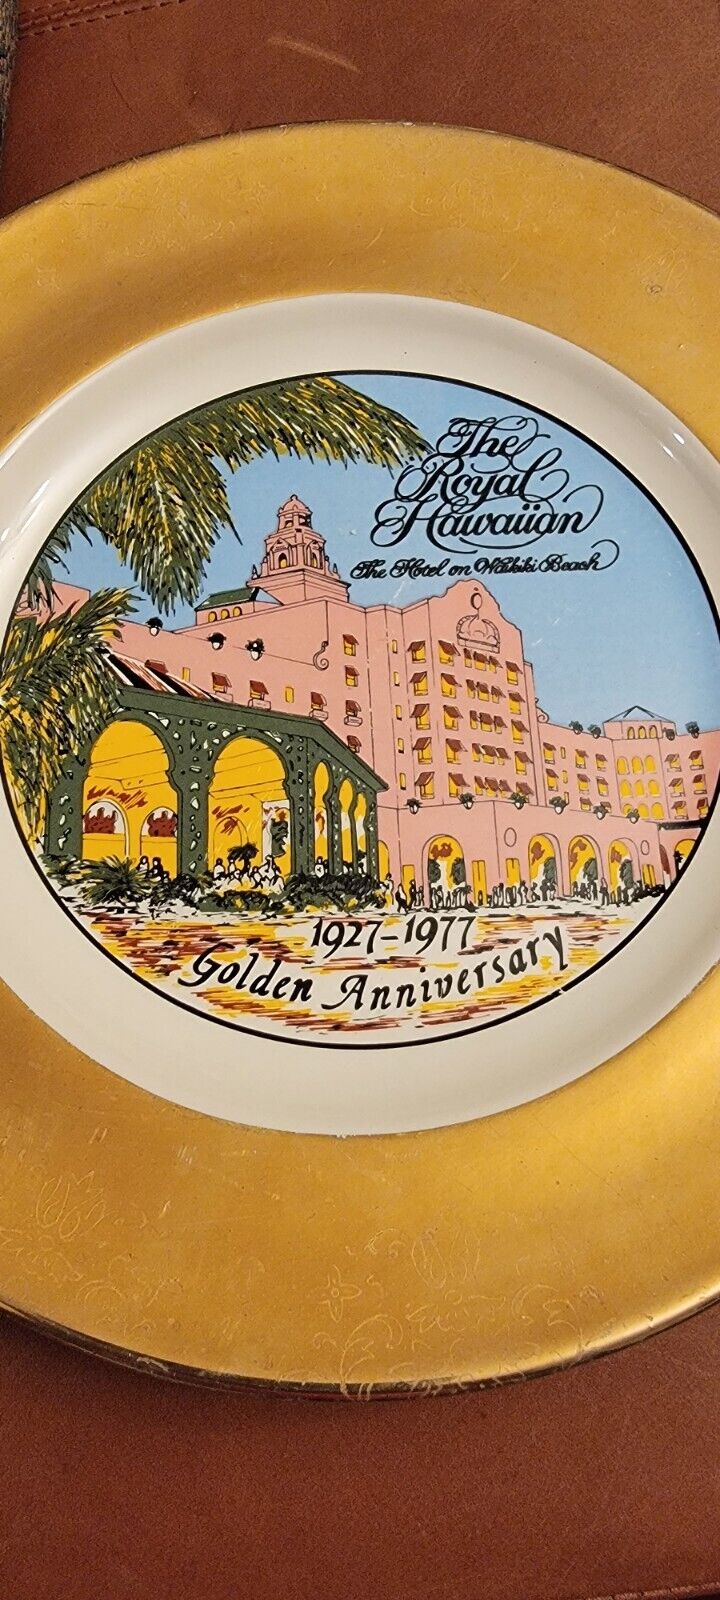 Vintage The Royal Hawaiian Waikiki Beach 1927-1977 Golden Anniversary Plate